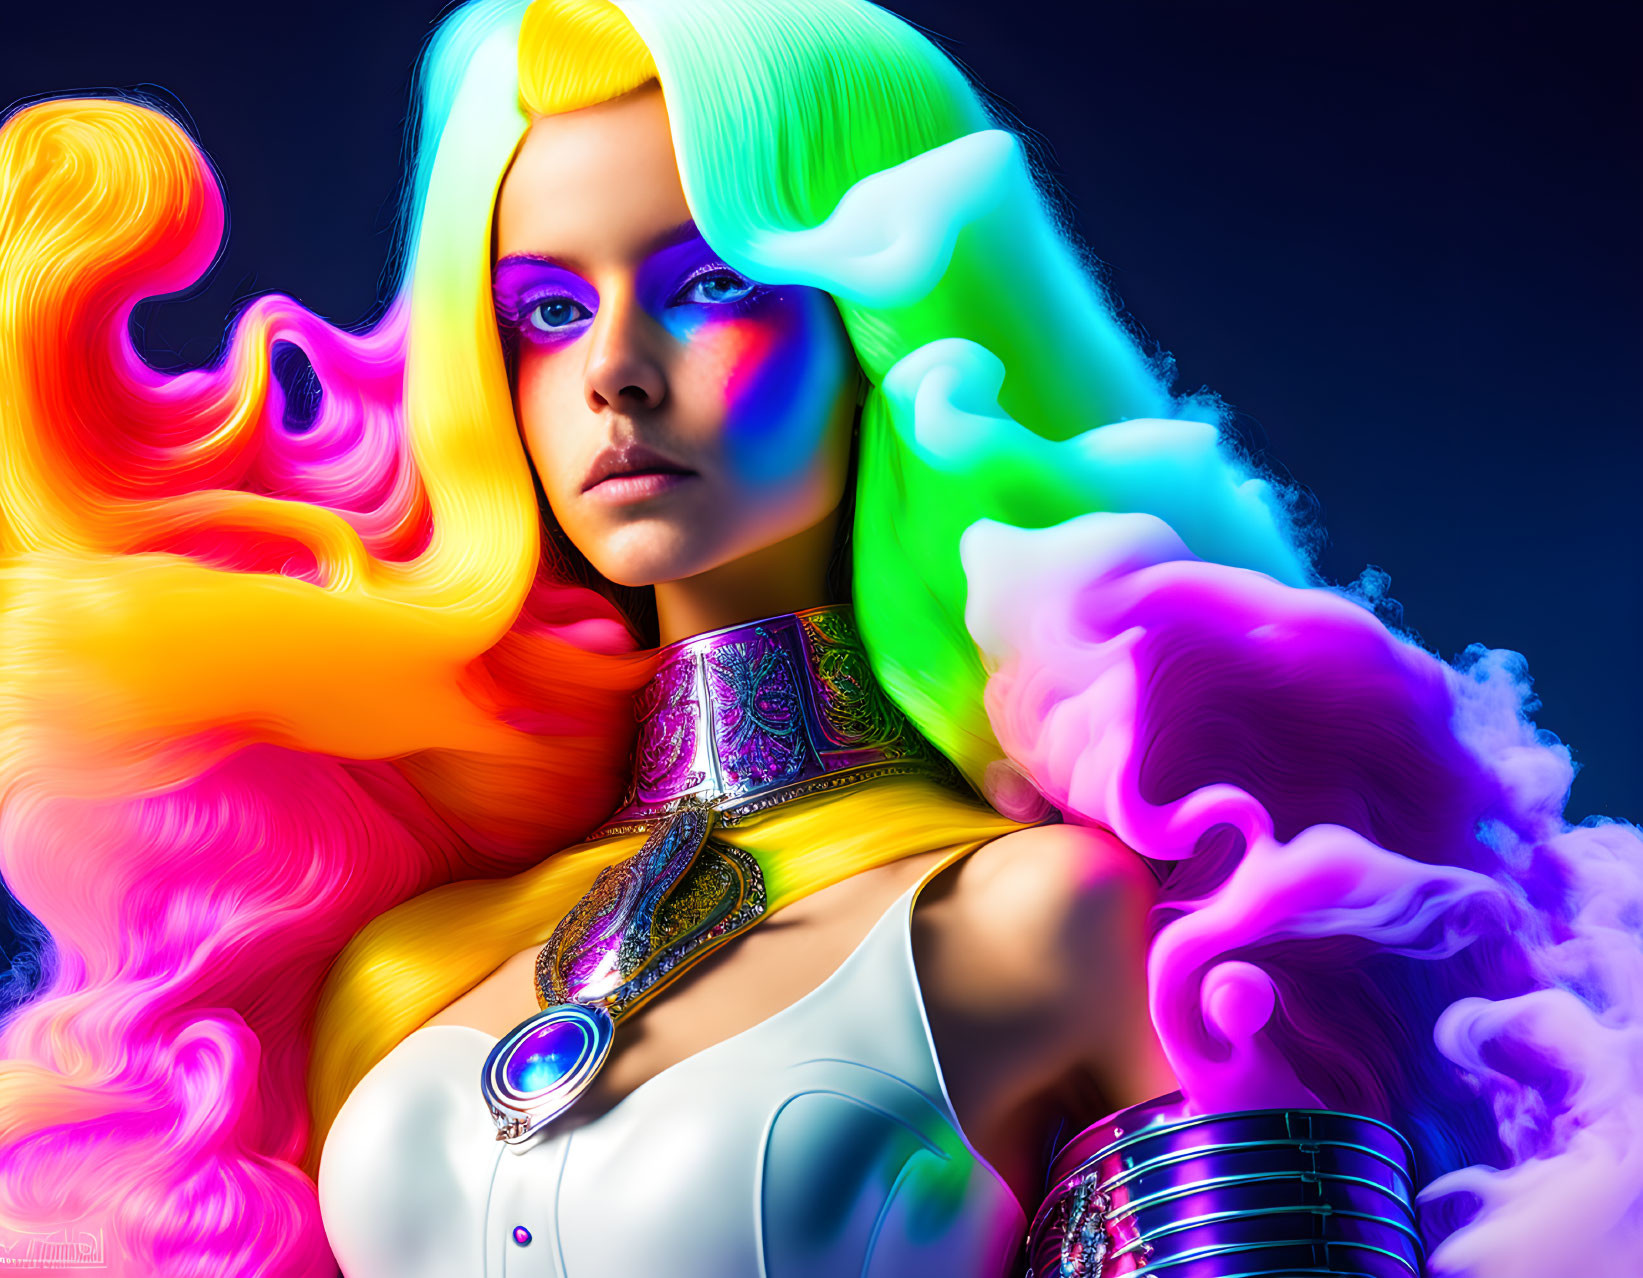 Vibrant digital artwork: Woman with neon hair, futuristic makeup, metallic attire on dark backdrop